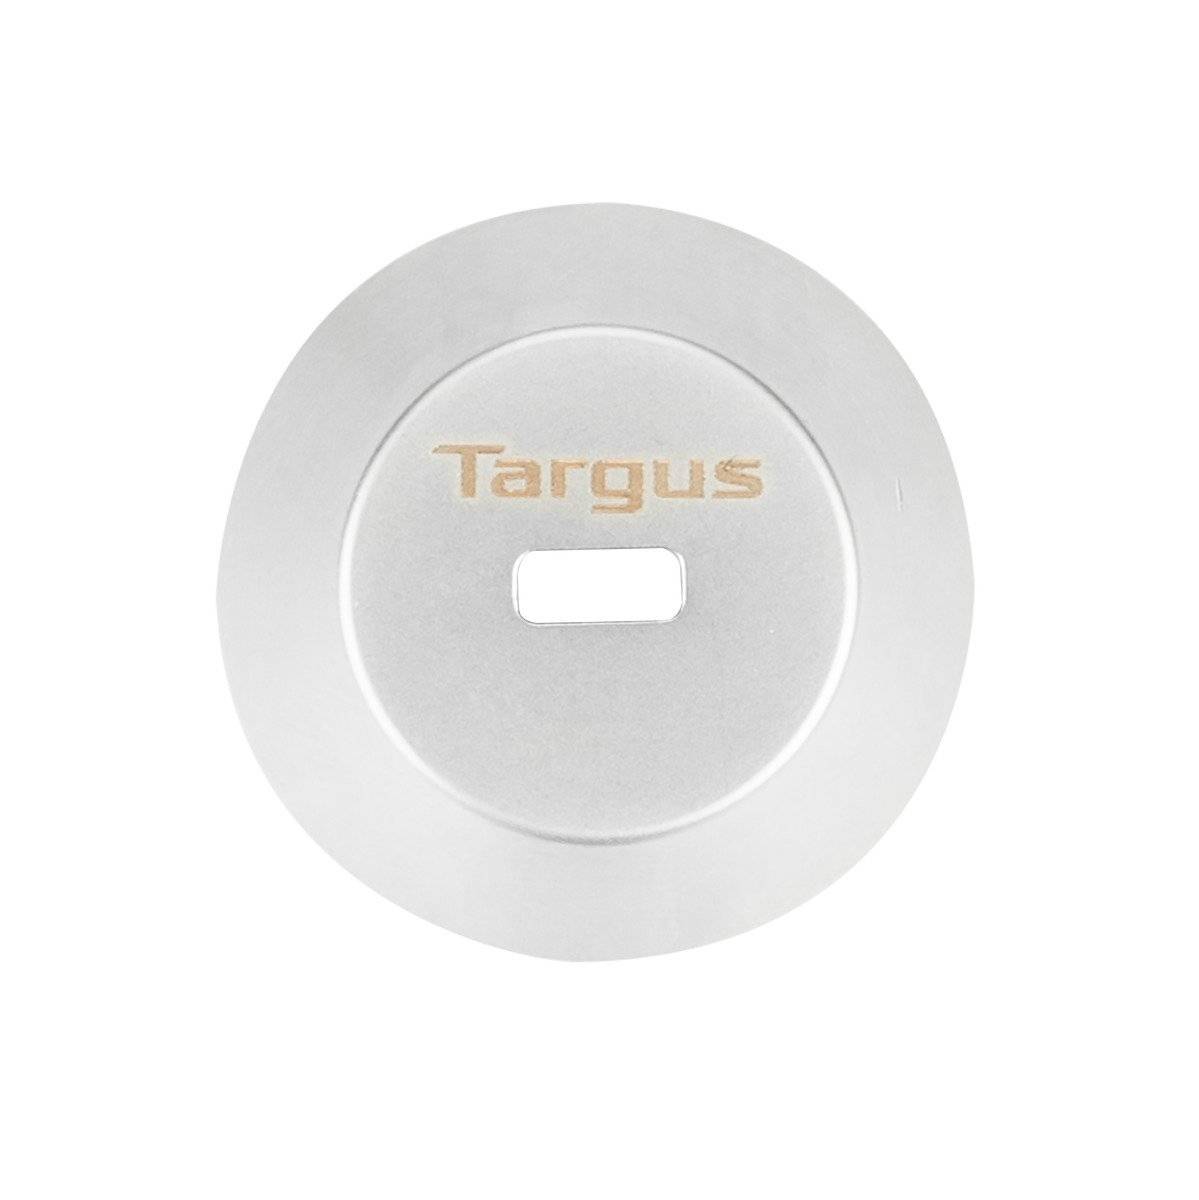 Rca Informatique - image du produit : TARGUS 3M BACKING FOR TABLET LOCKS